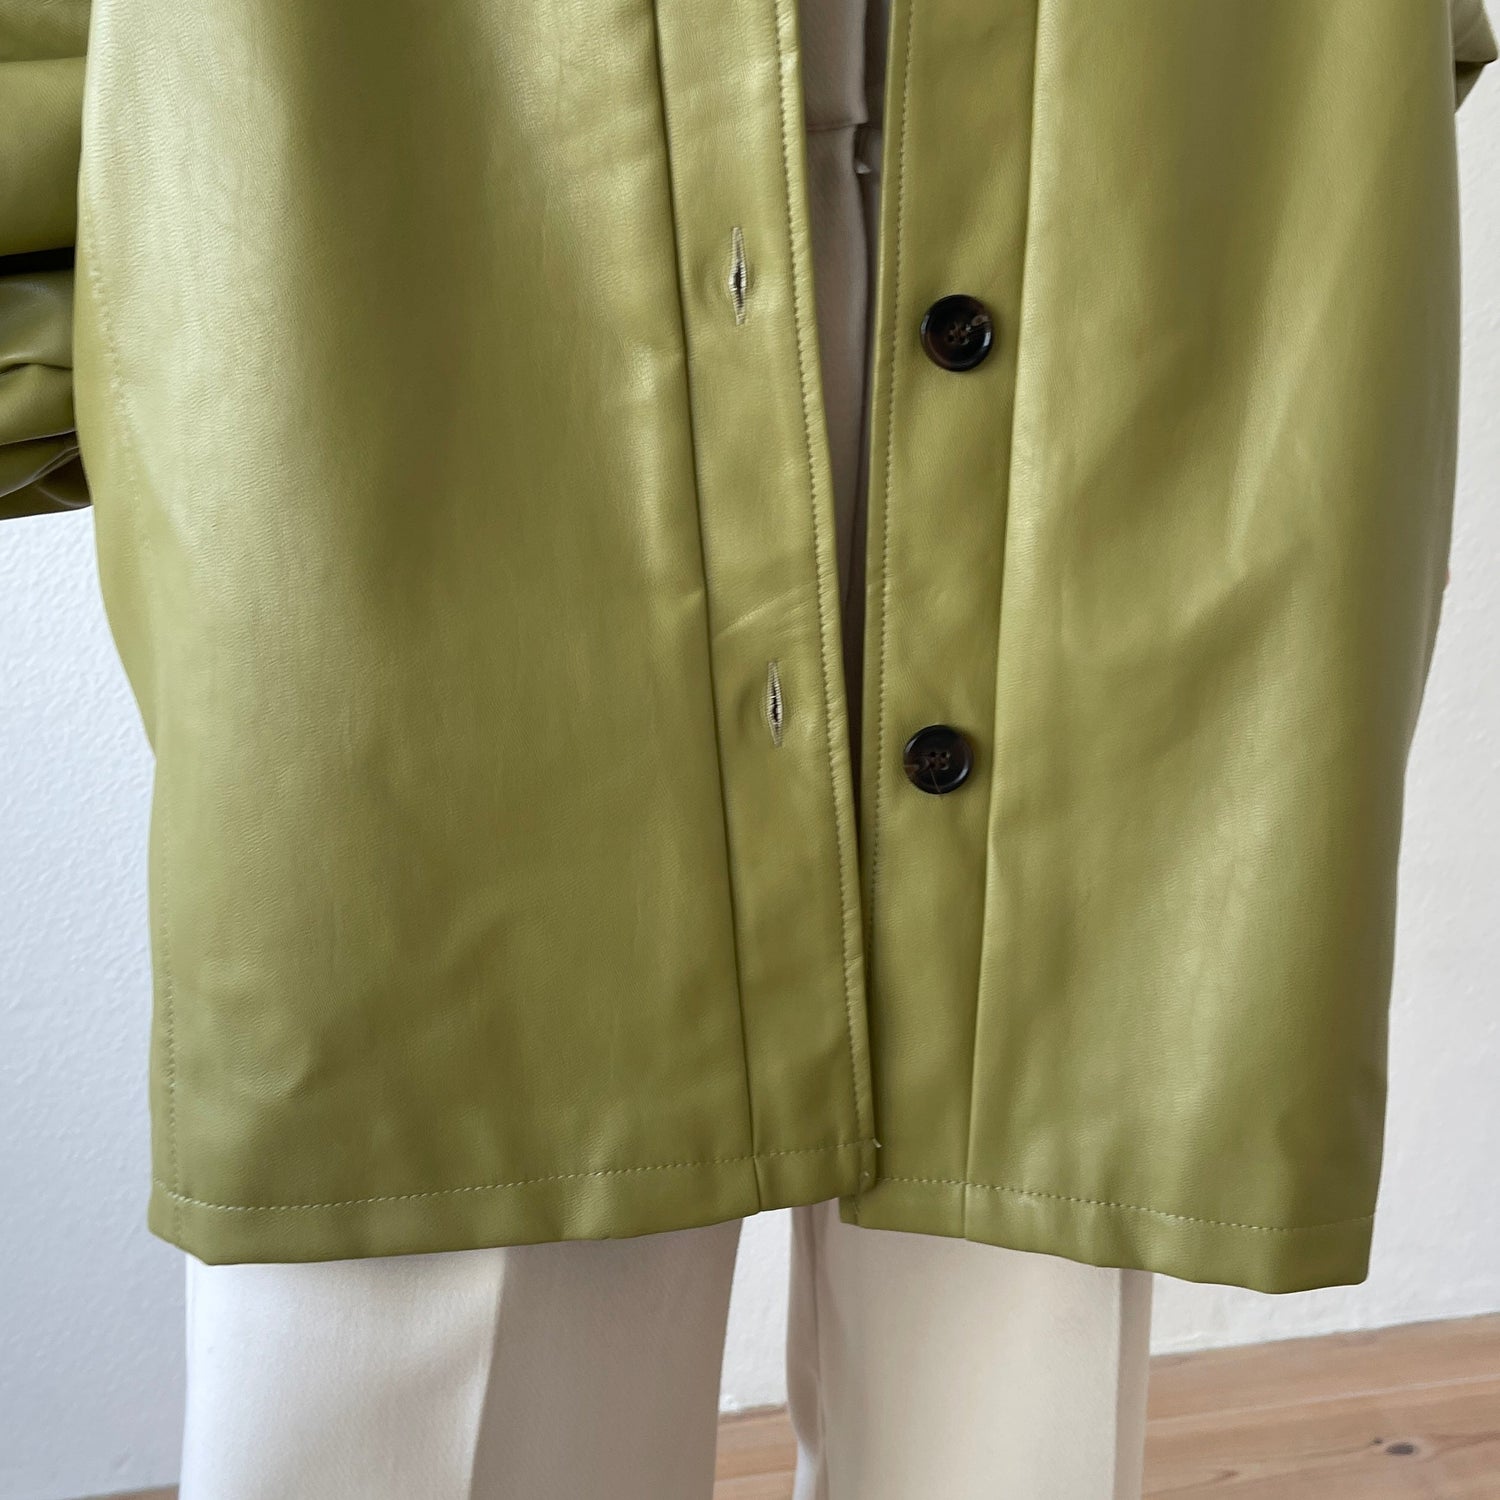 【SAMPLE】volume sleeve fake leather coat / olive